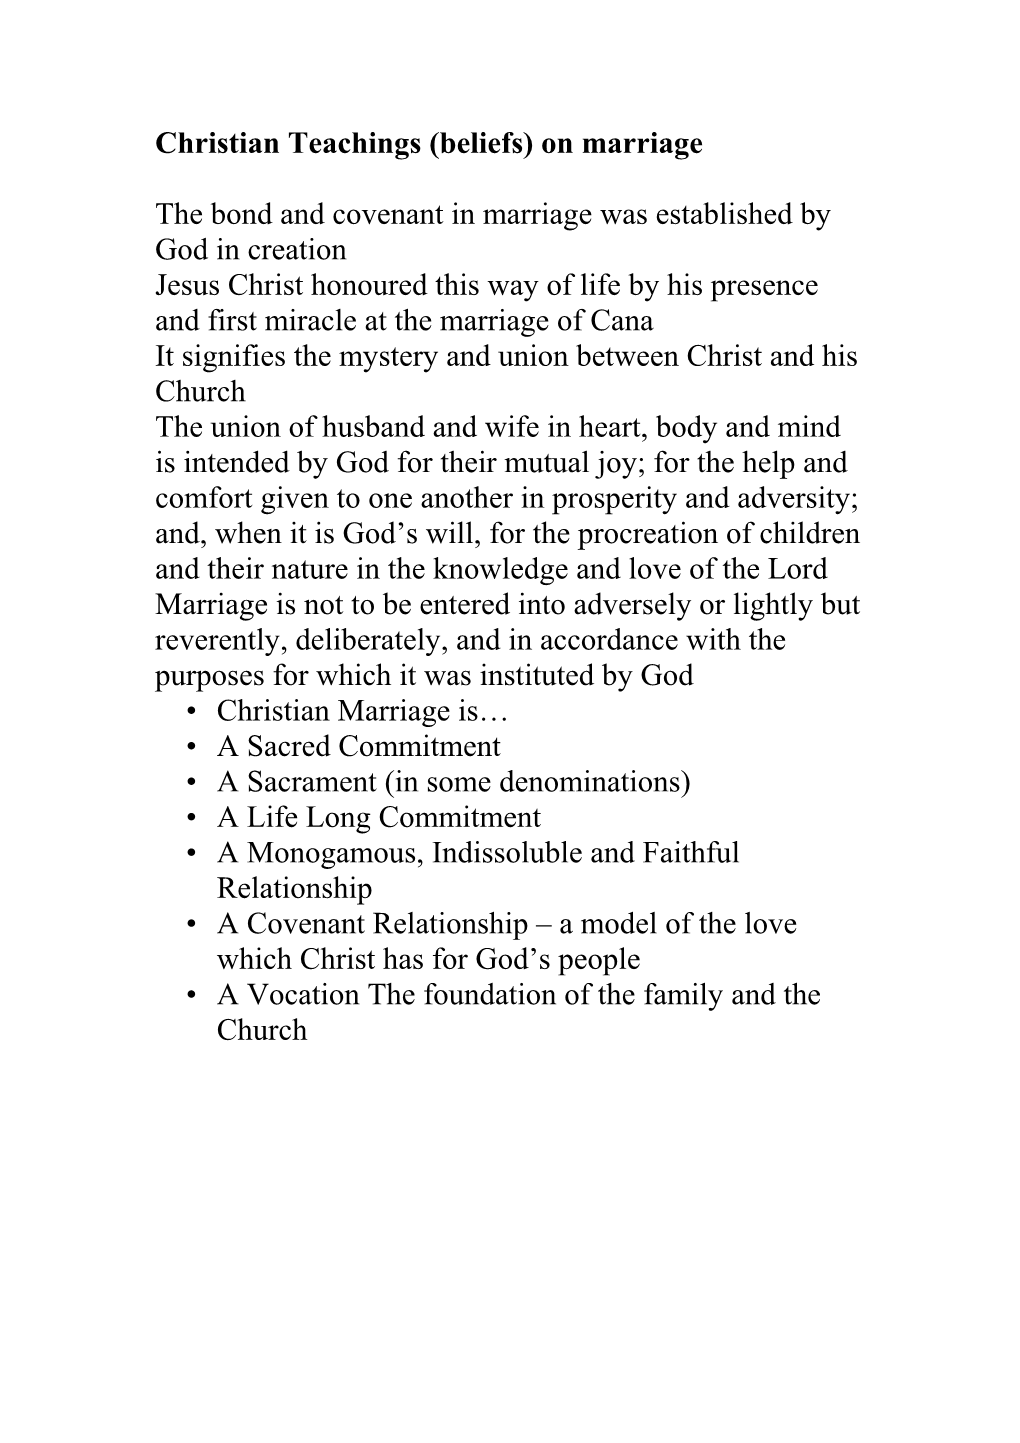 Christian Teachings (Beliefs) on Marriage